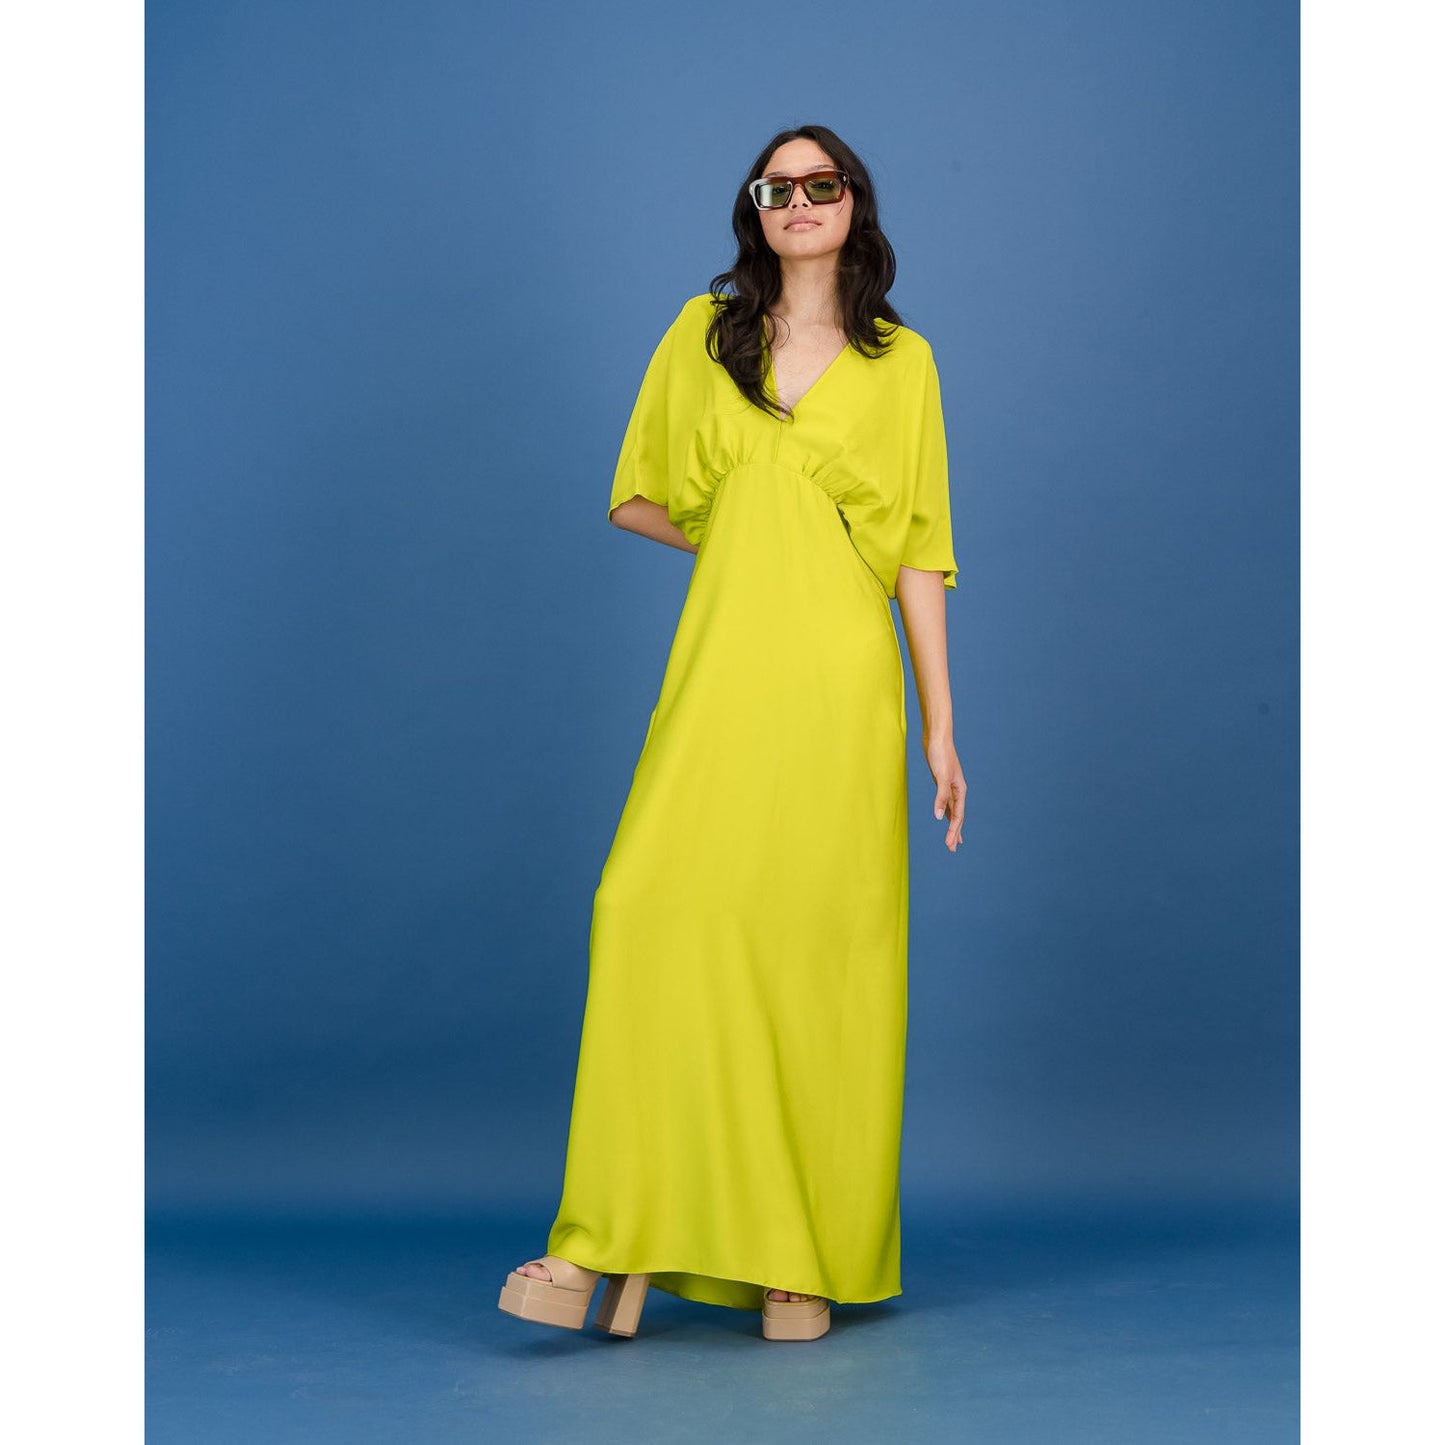 Short Sleeve Satin Formal Dress in Lime